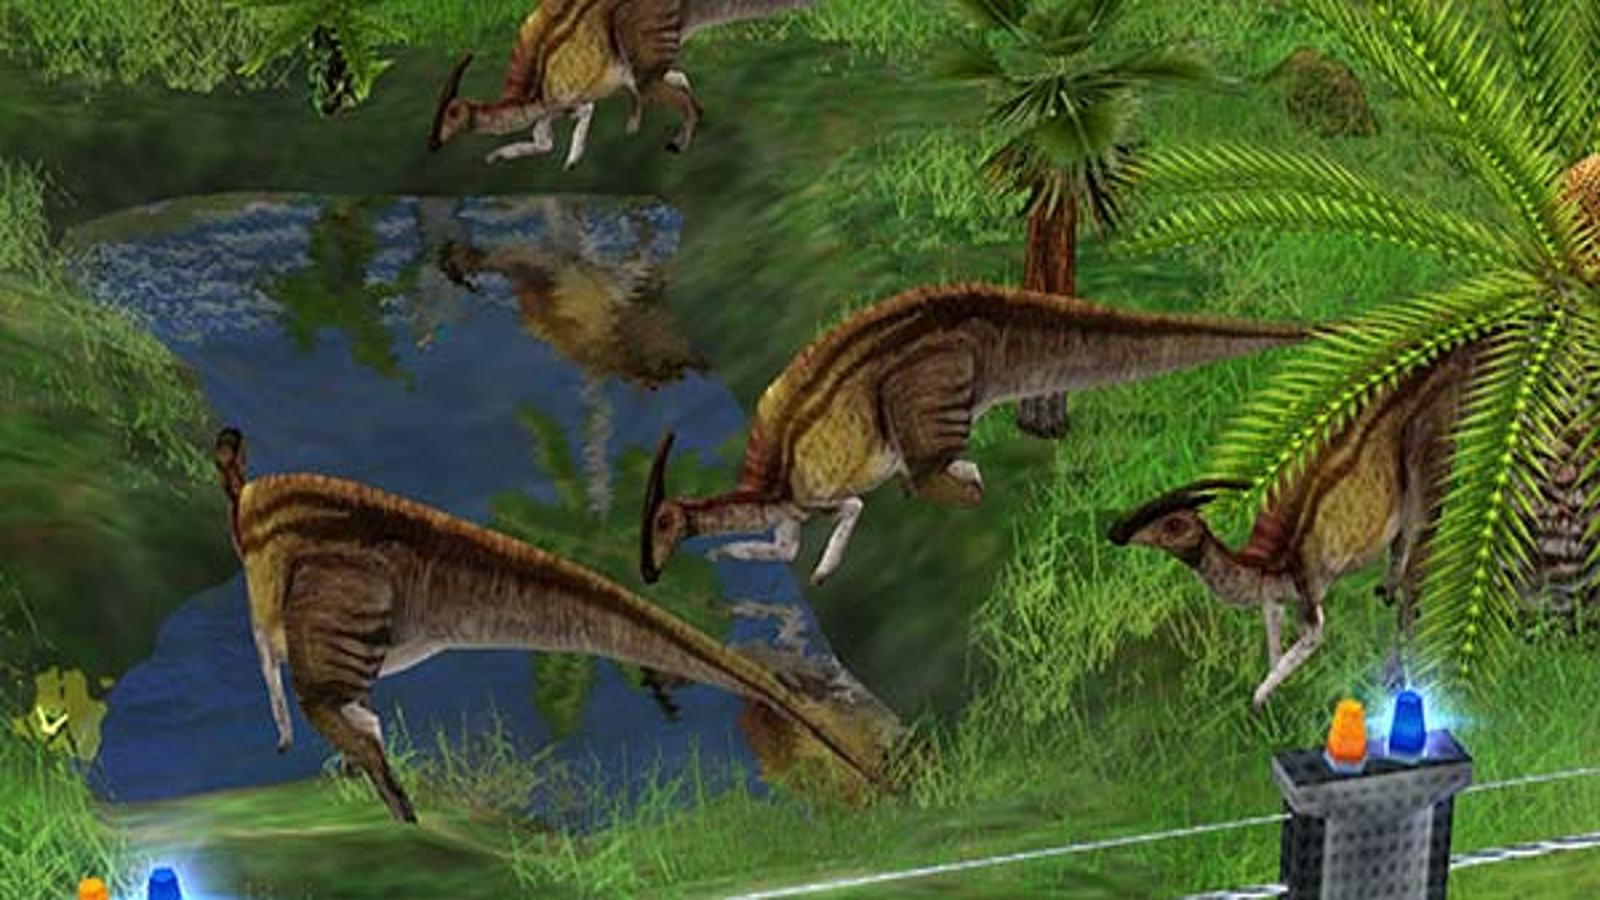 jurassic park operation genesis velociraptor